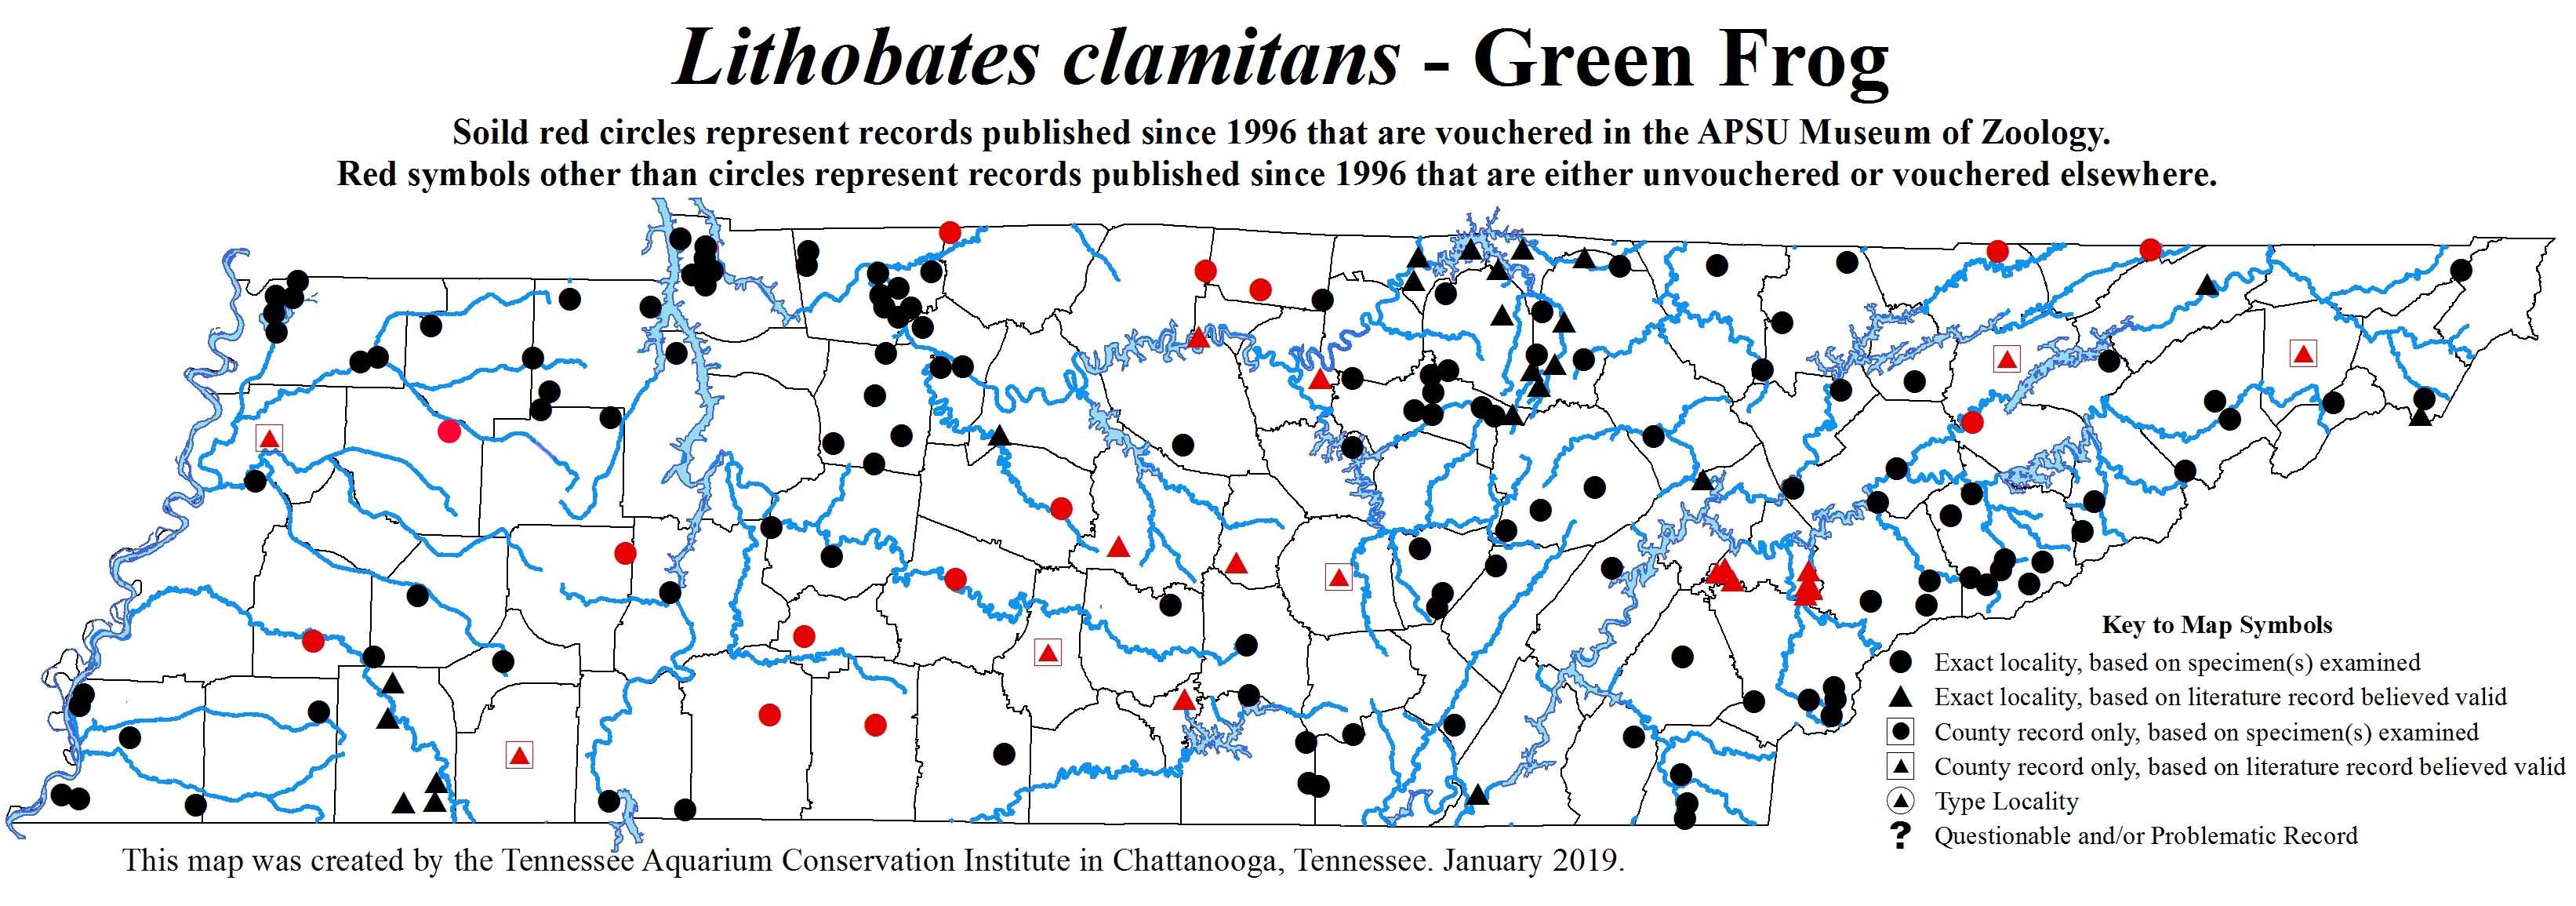 Update to Lithobates clamitans